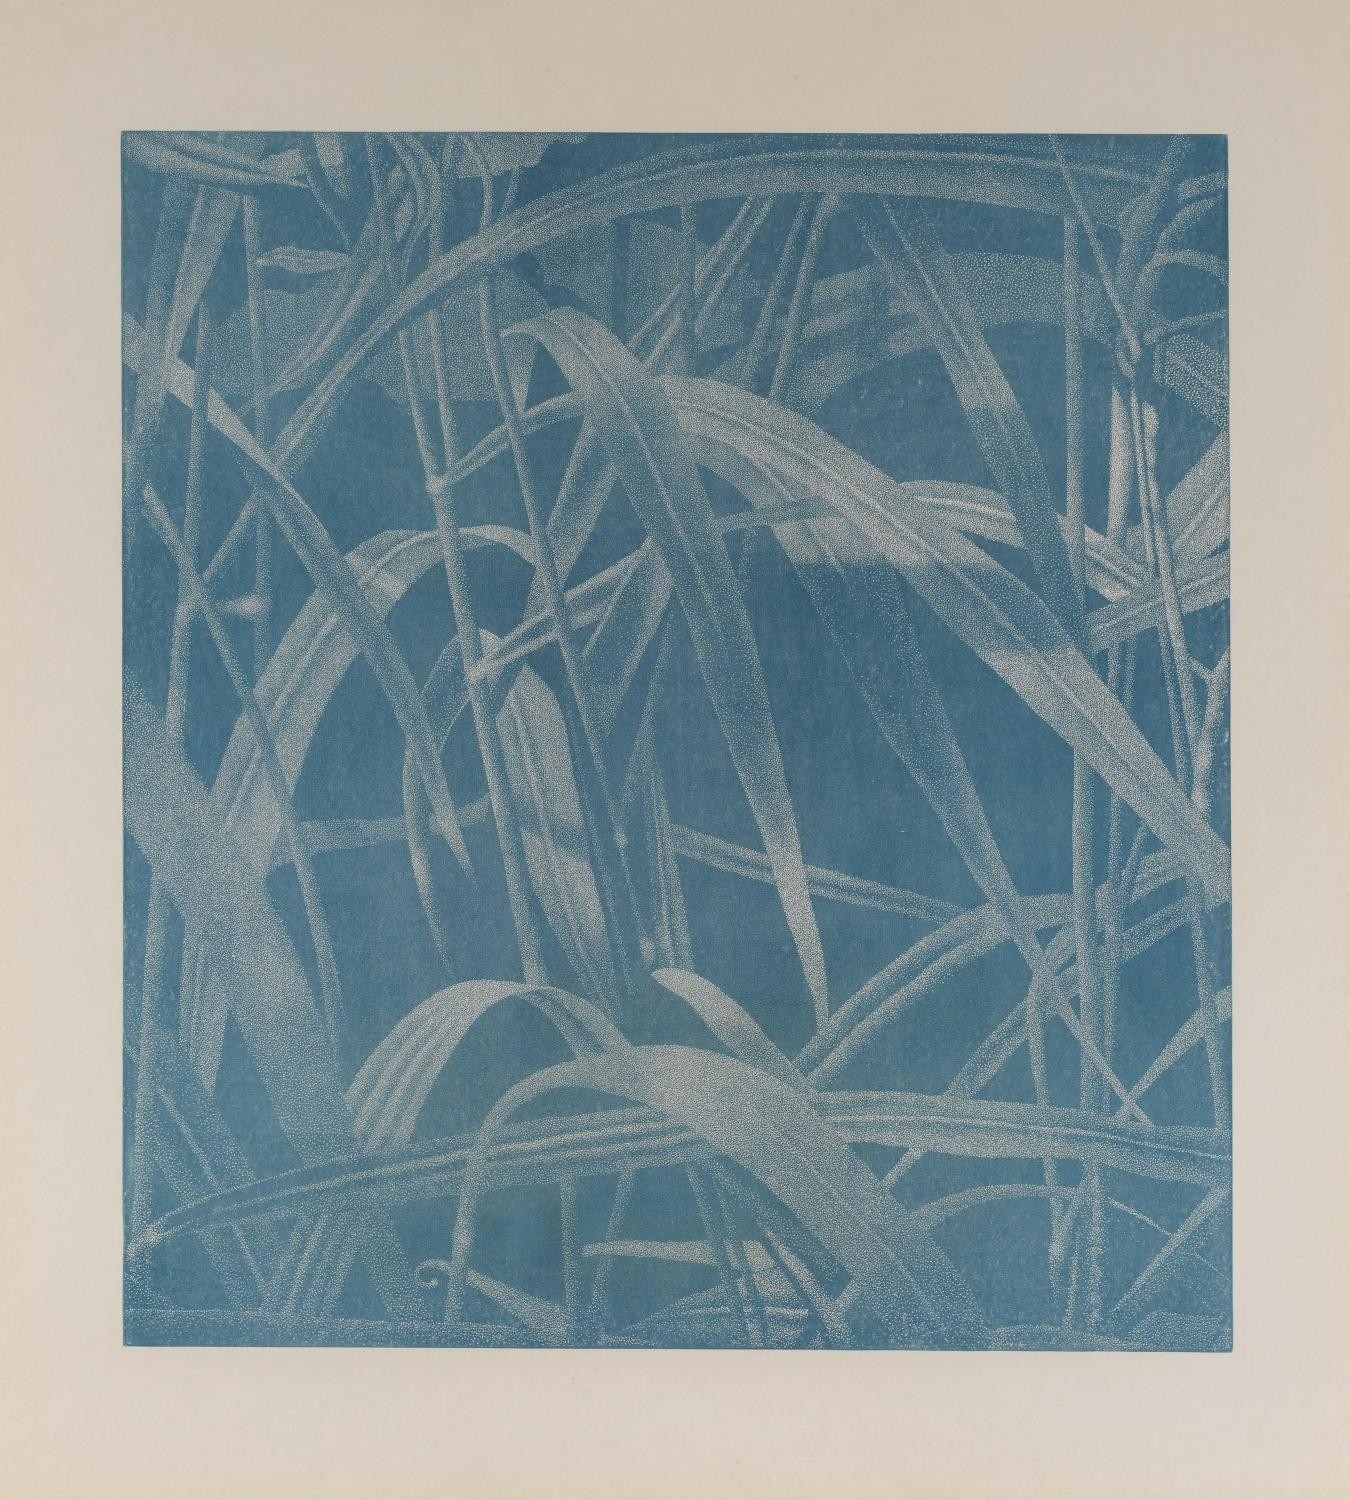 Grasses I (Sky Blue) by Franz Gertsch, 1999-2000